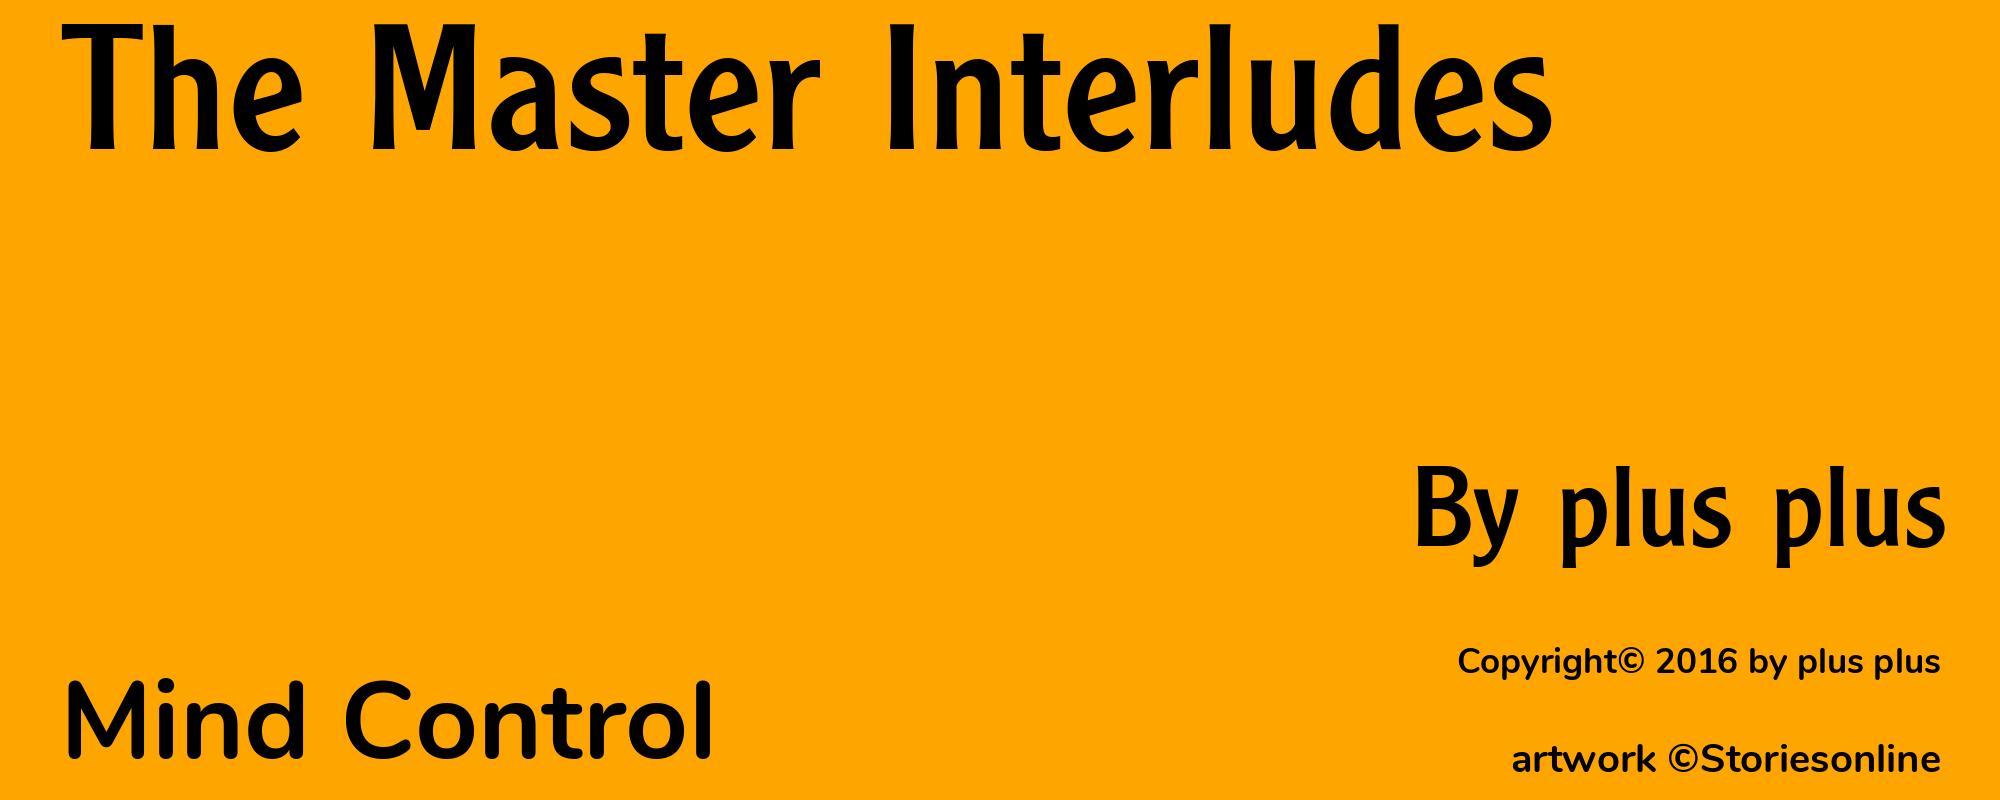 The Master Interludes - Cover